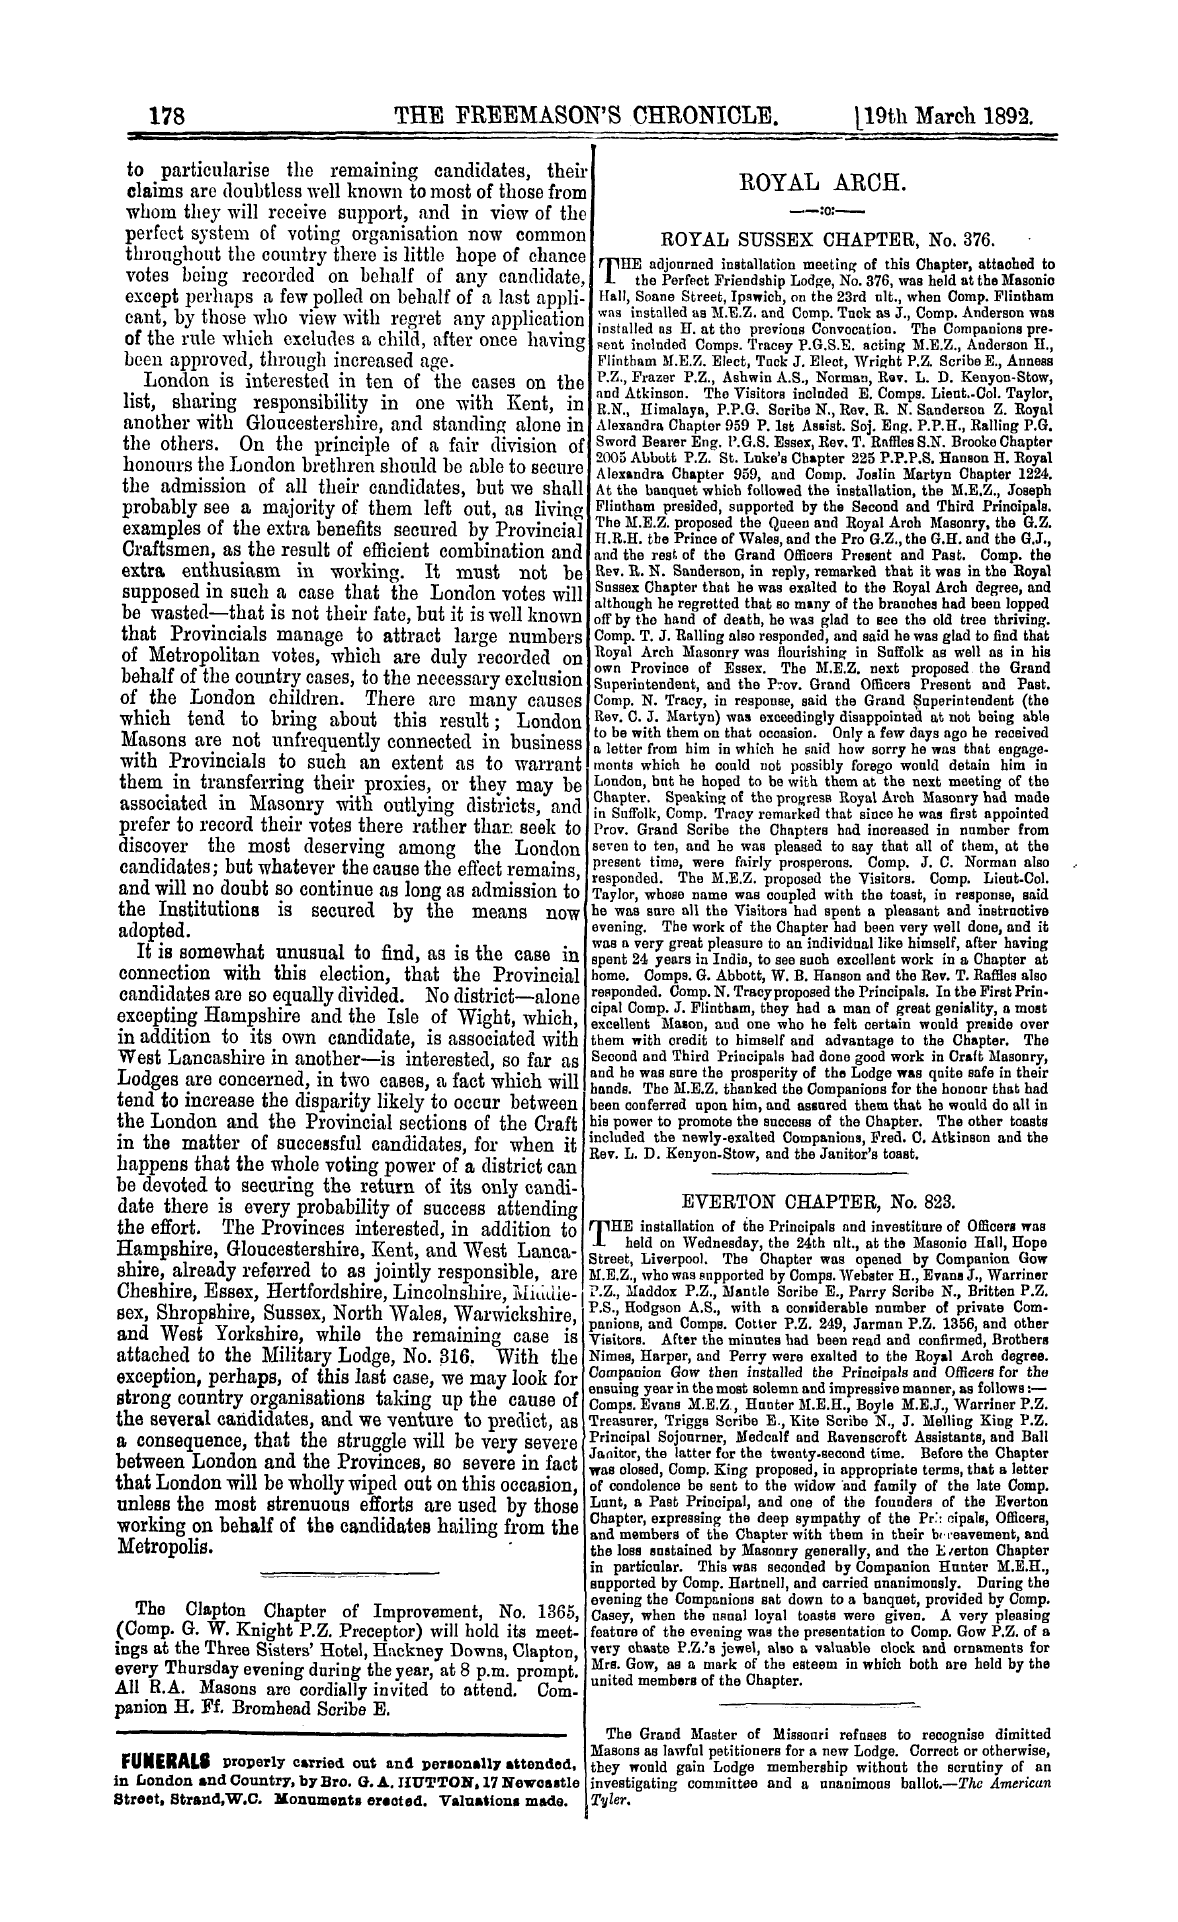 The Freemason's Chronicle: 1892-03-19 - Royal Arch.